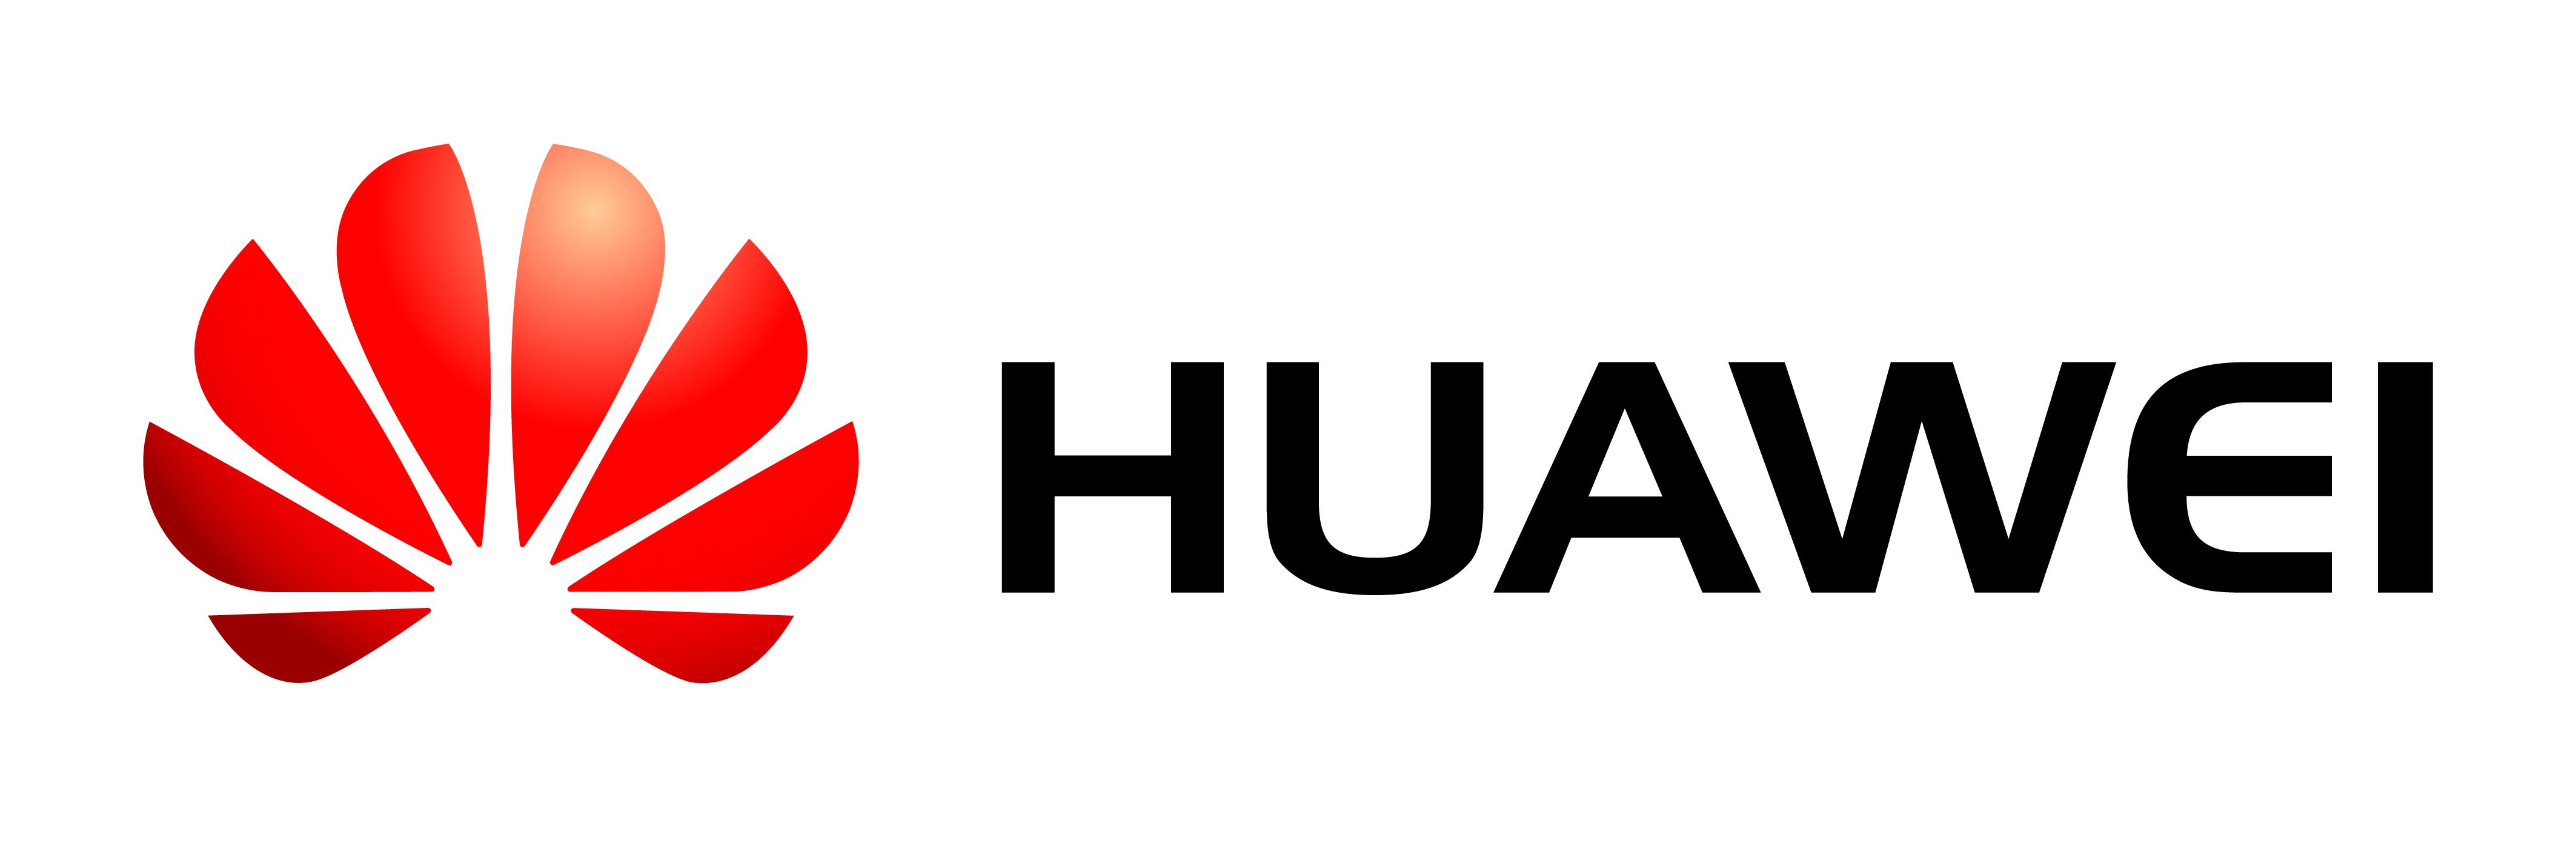 [Actualizado] قد تكون هذه أول نظرة على جهاز Huawei القابل للطي 3